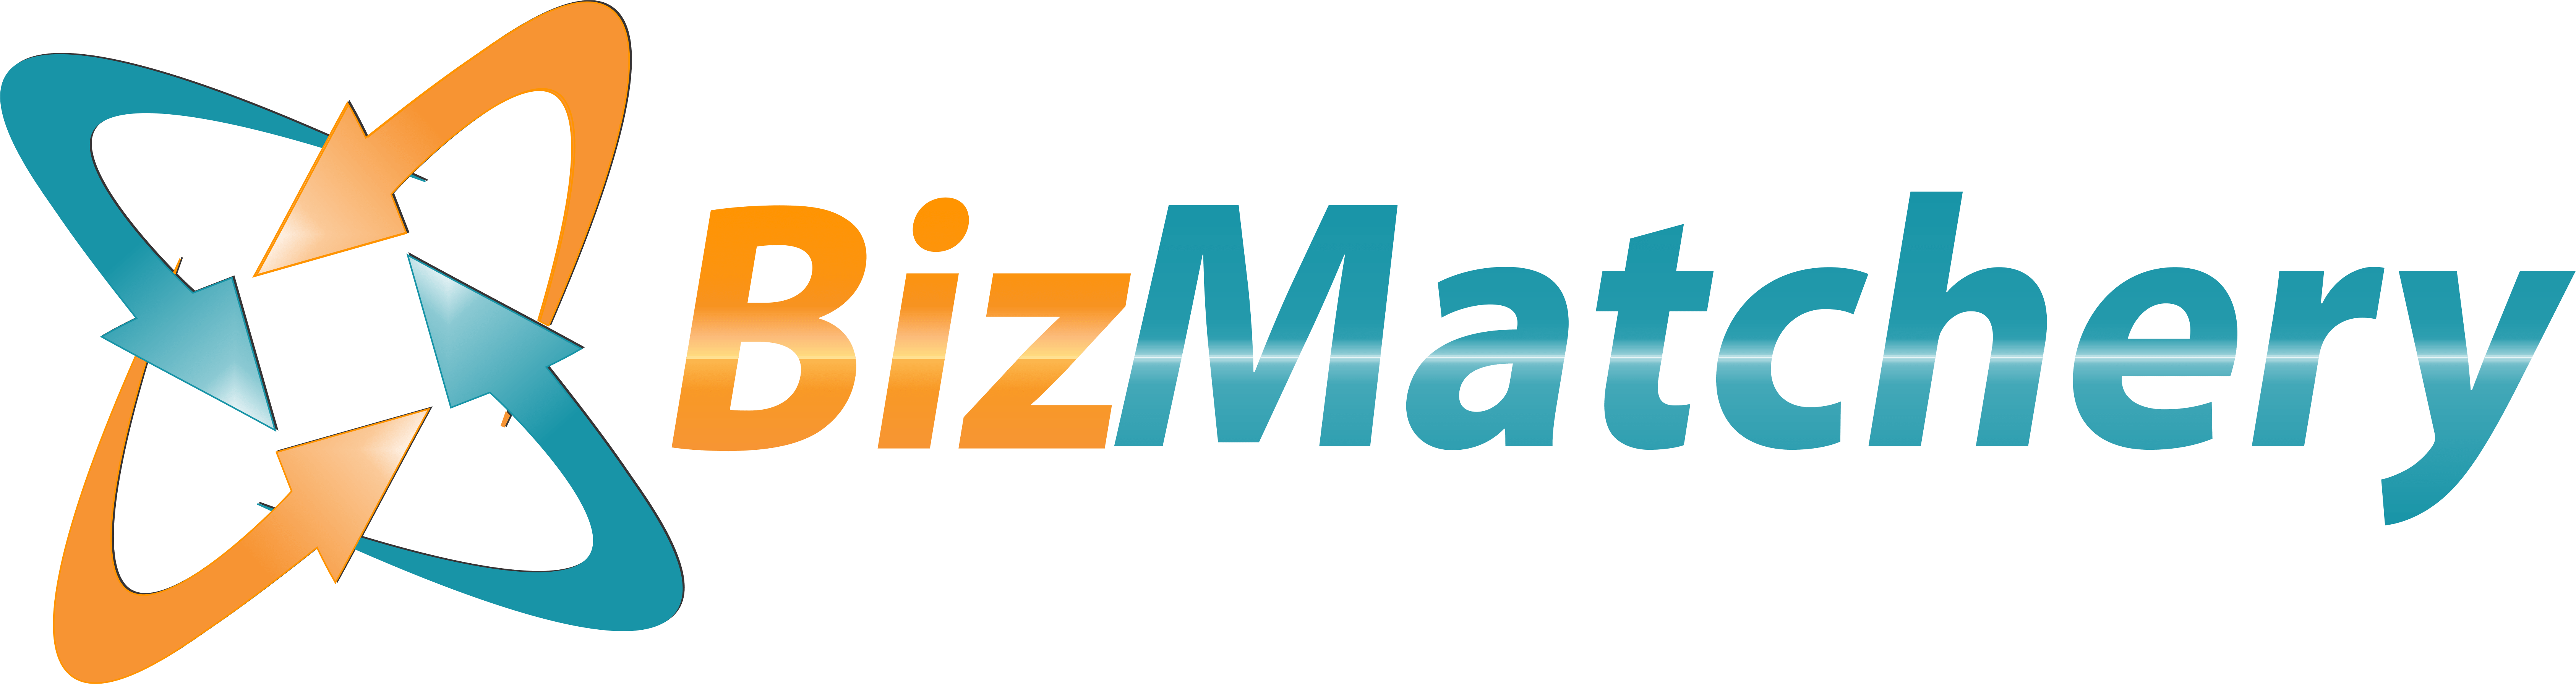 BizMatchery Digital Marketing Strategists